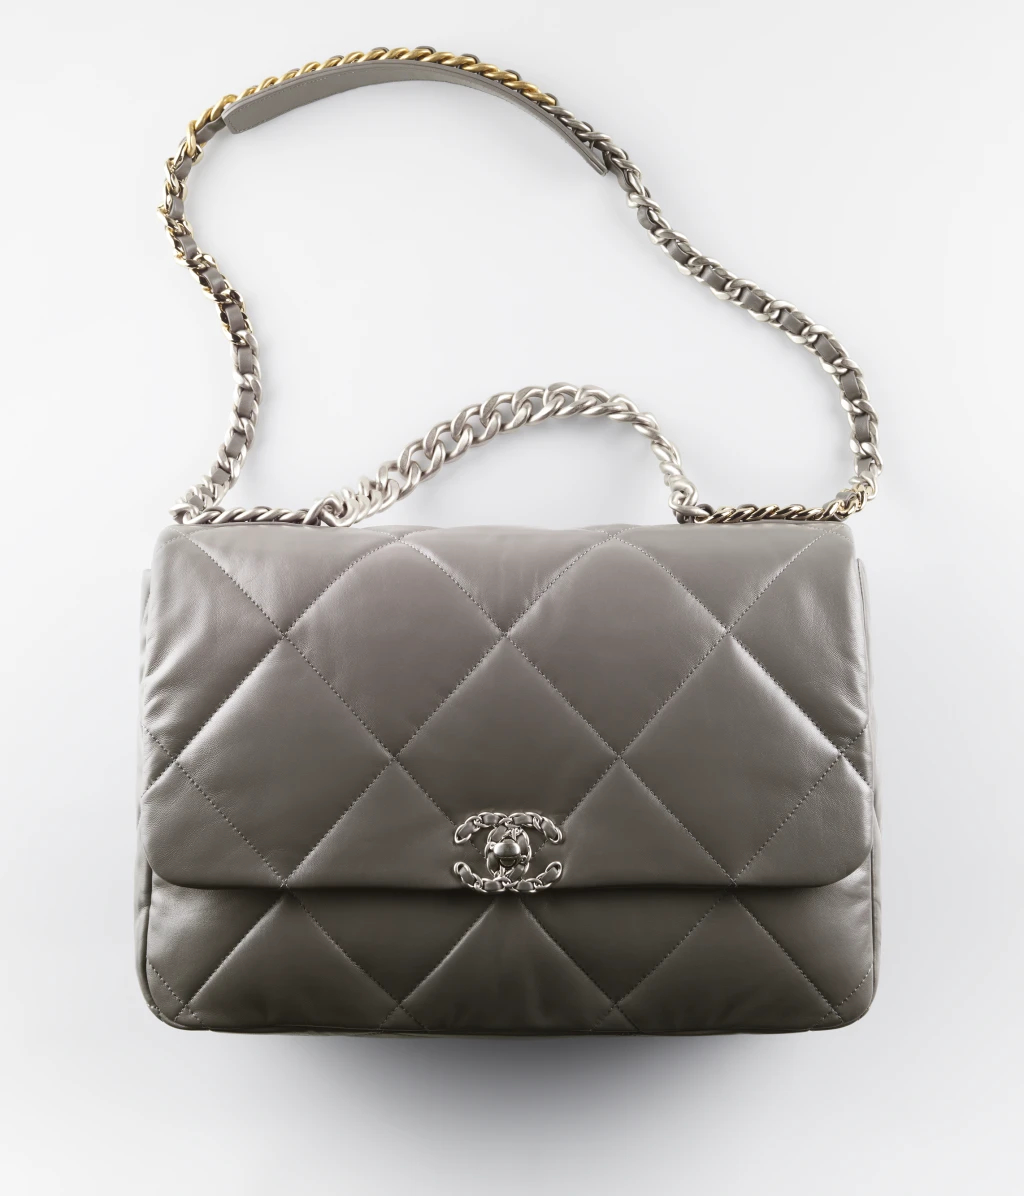 Chanel Maxi Bag